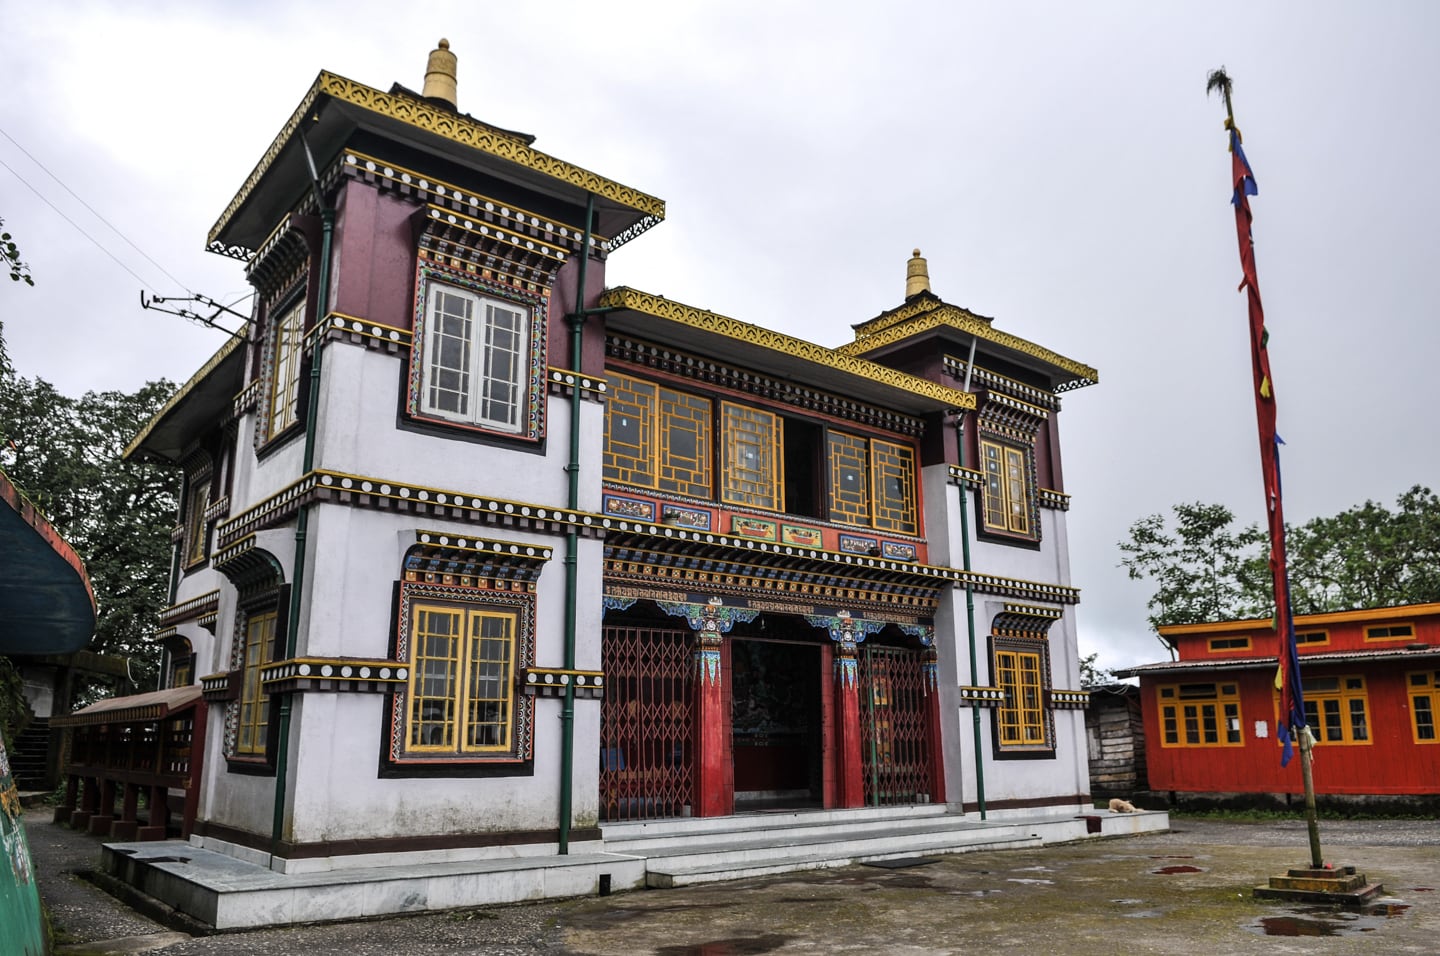 Bhutia Busty Monastery Darjeeling Hill Station India